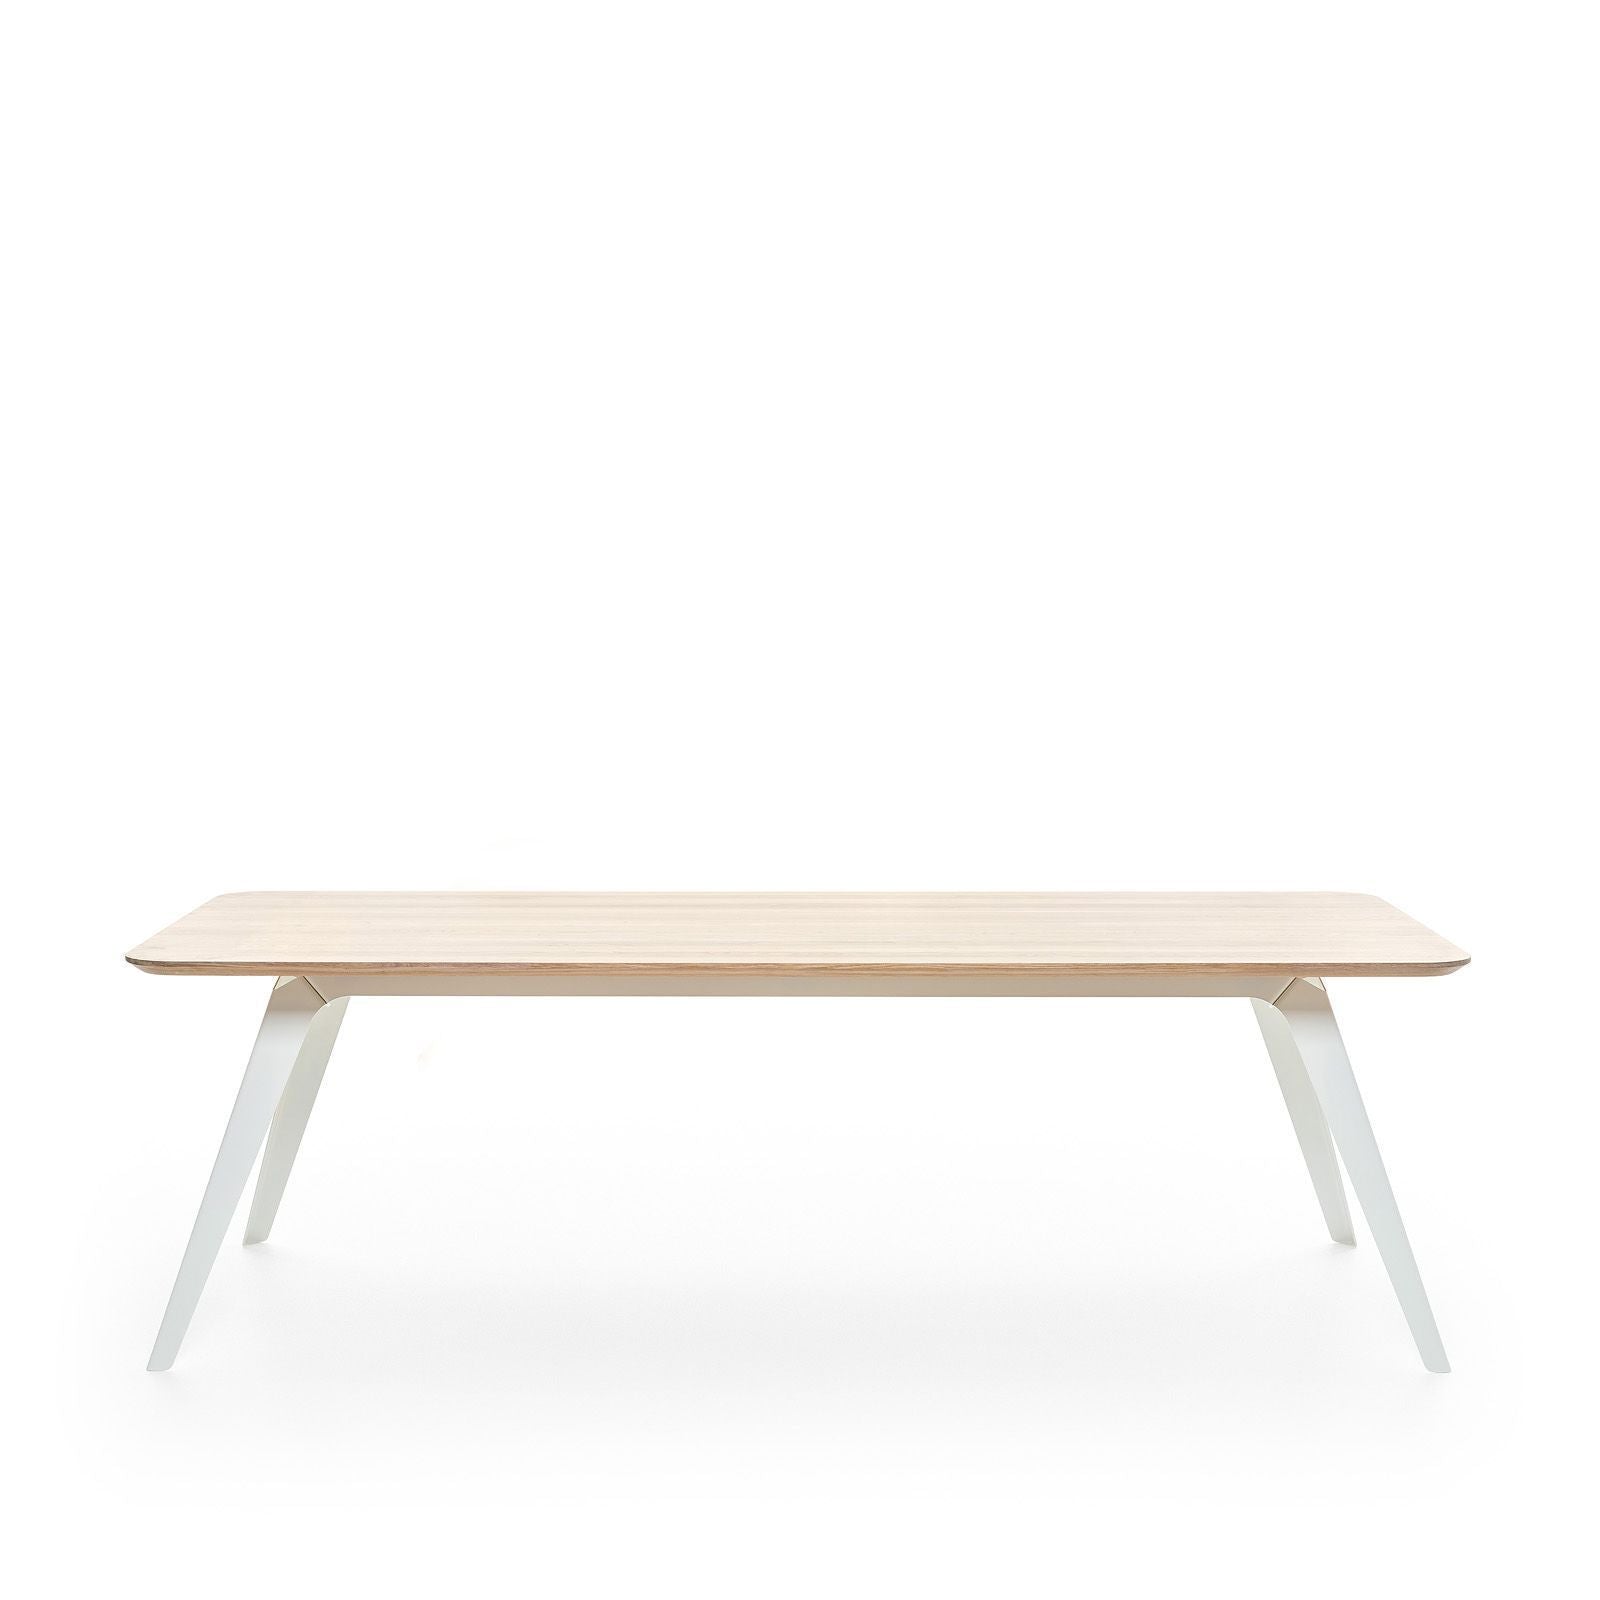 Puik Fold spisebord 240x100cm, hvid / naturel